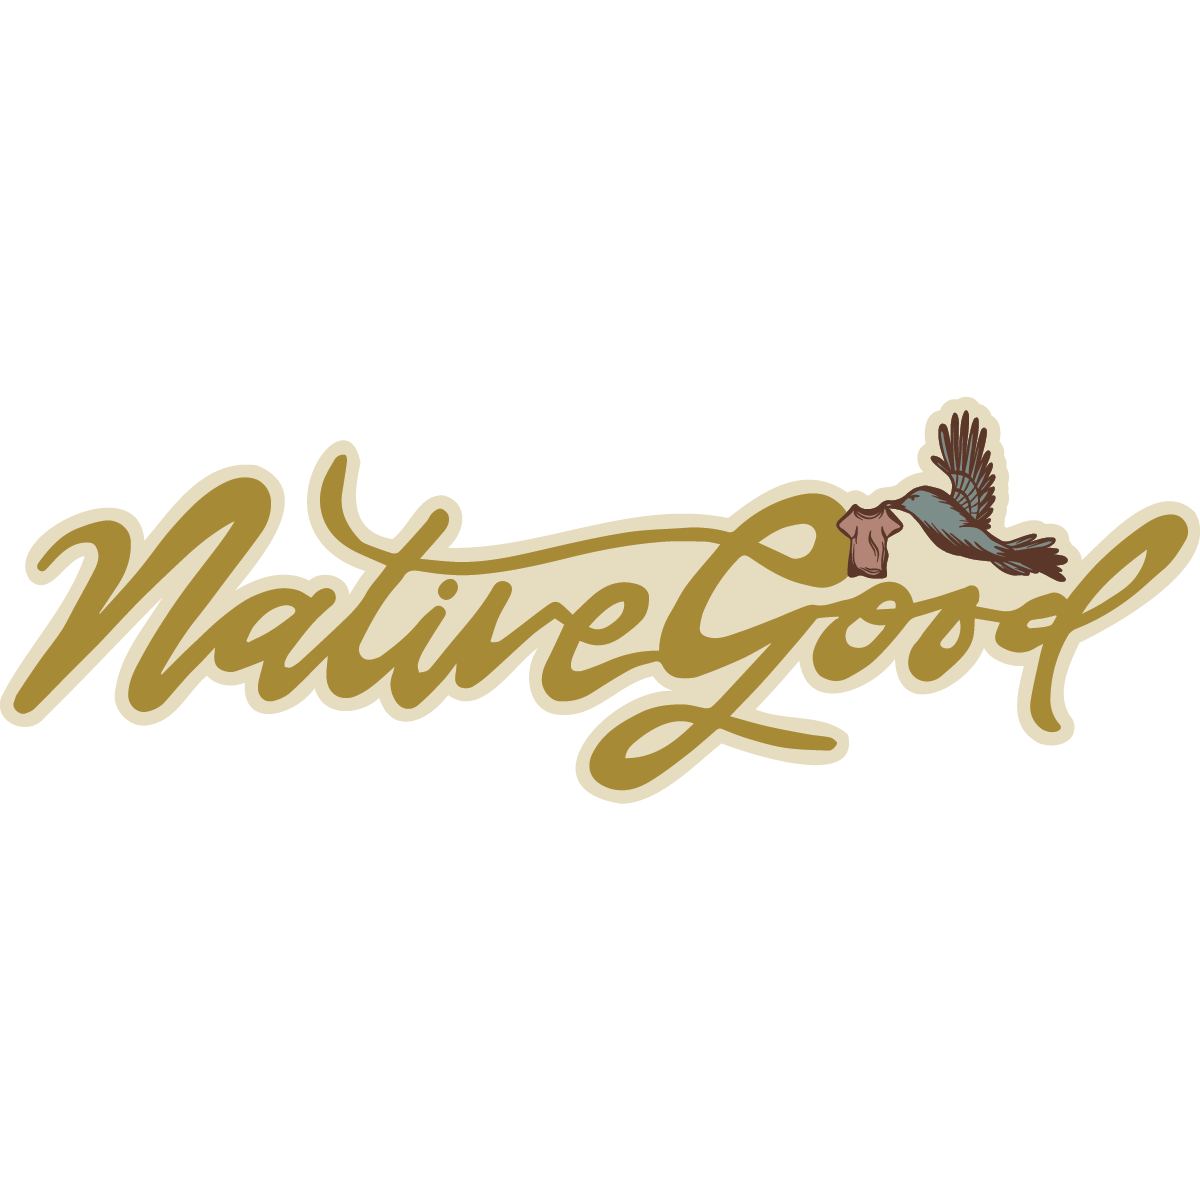 NativeGood_logo